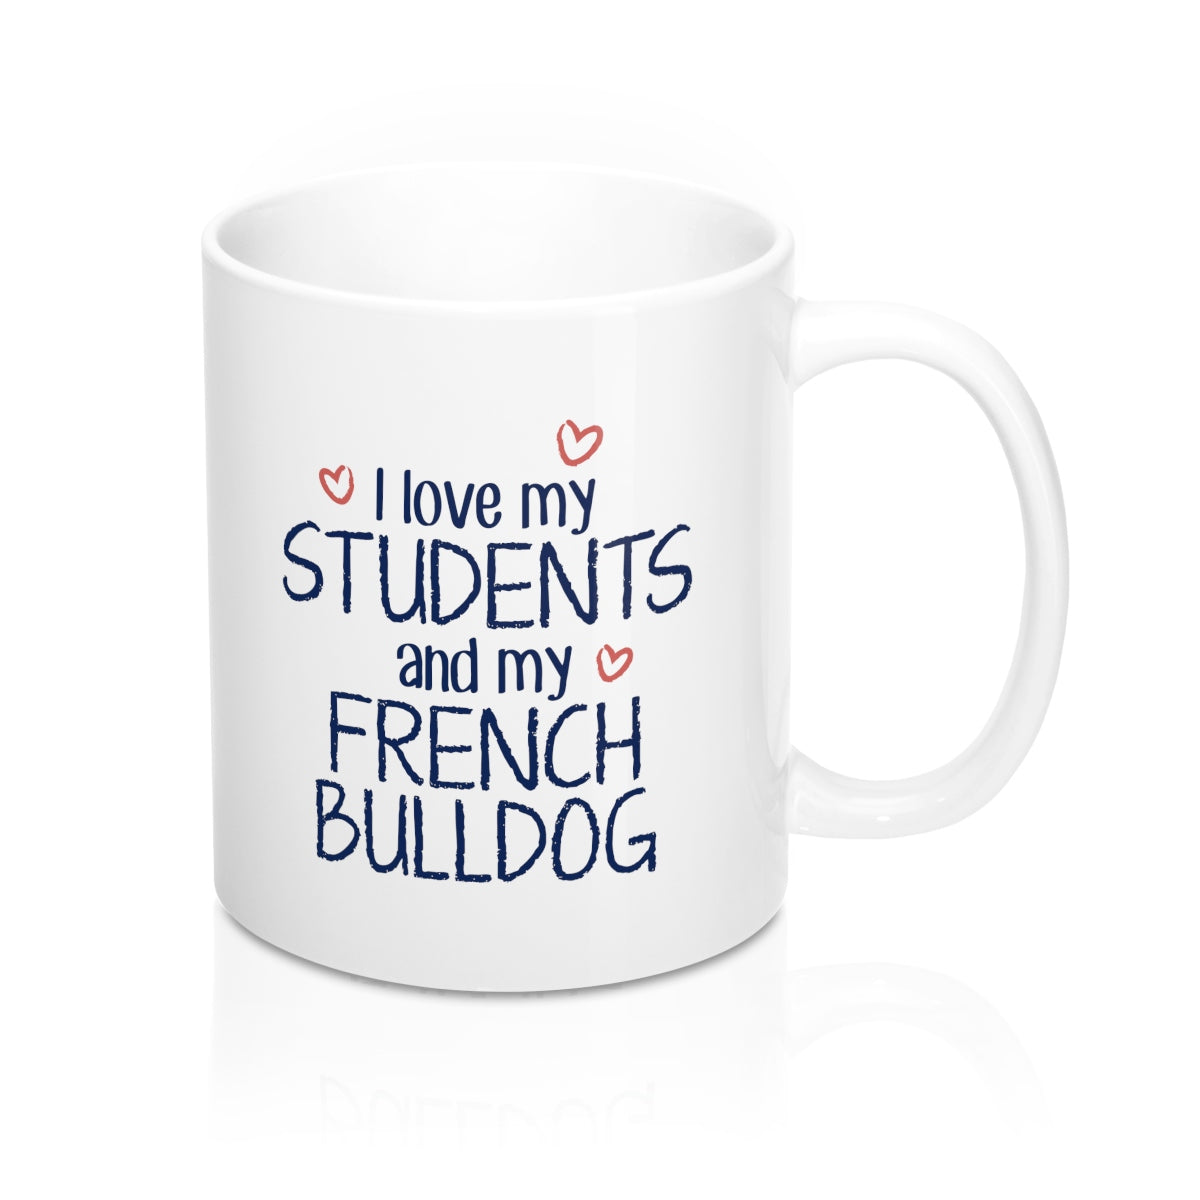 I Love My Students and My French Bulldog Coffee Mug